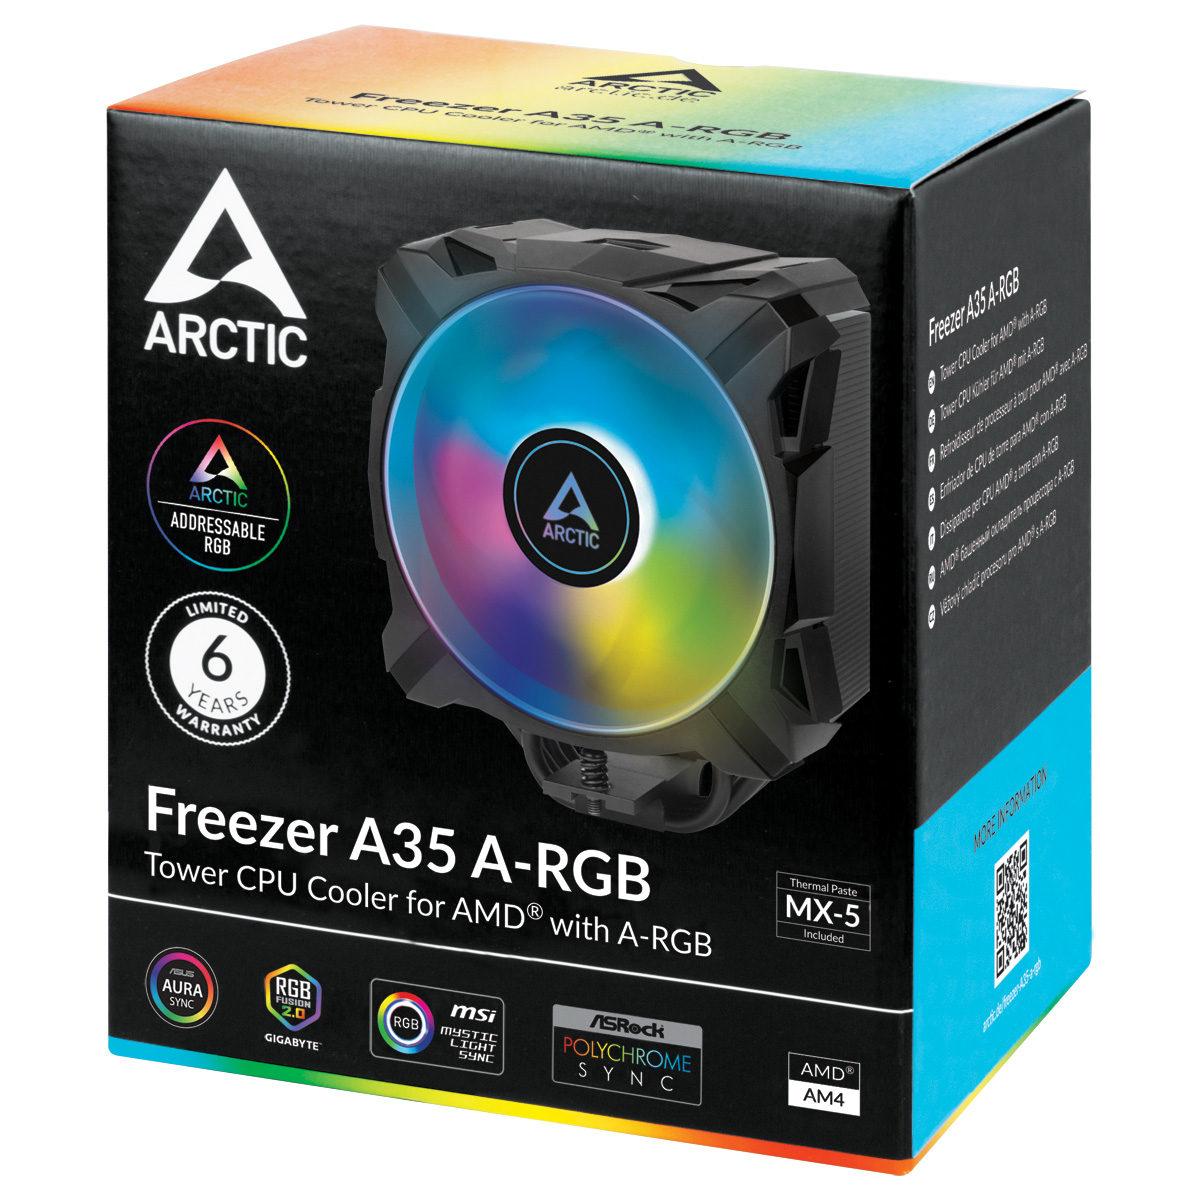 Freezer A35 A-RGB